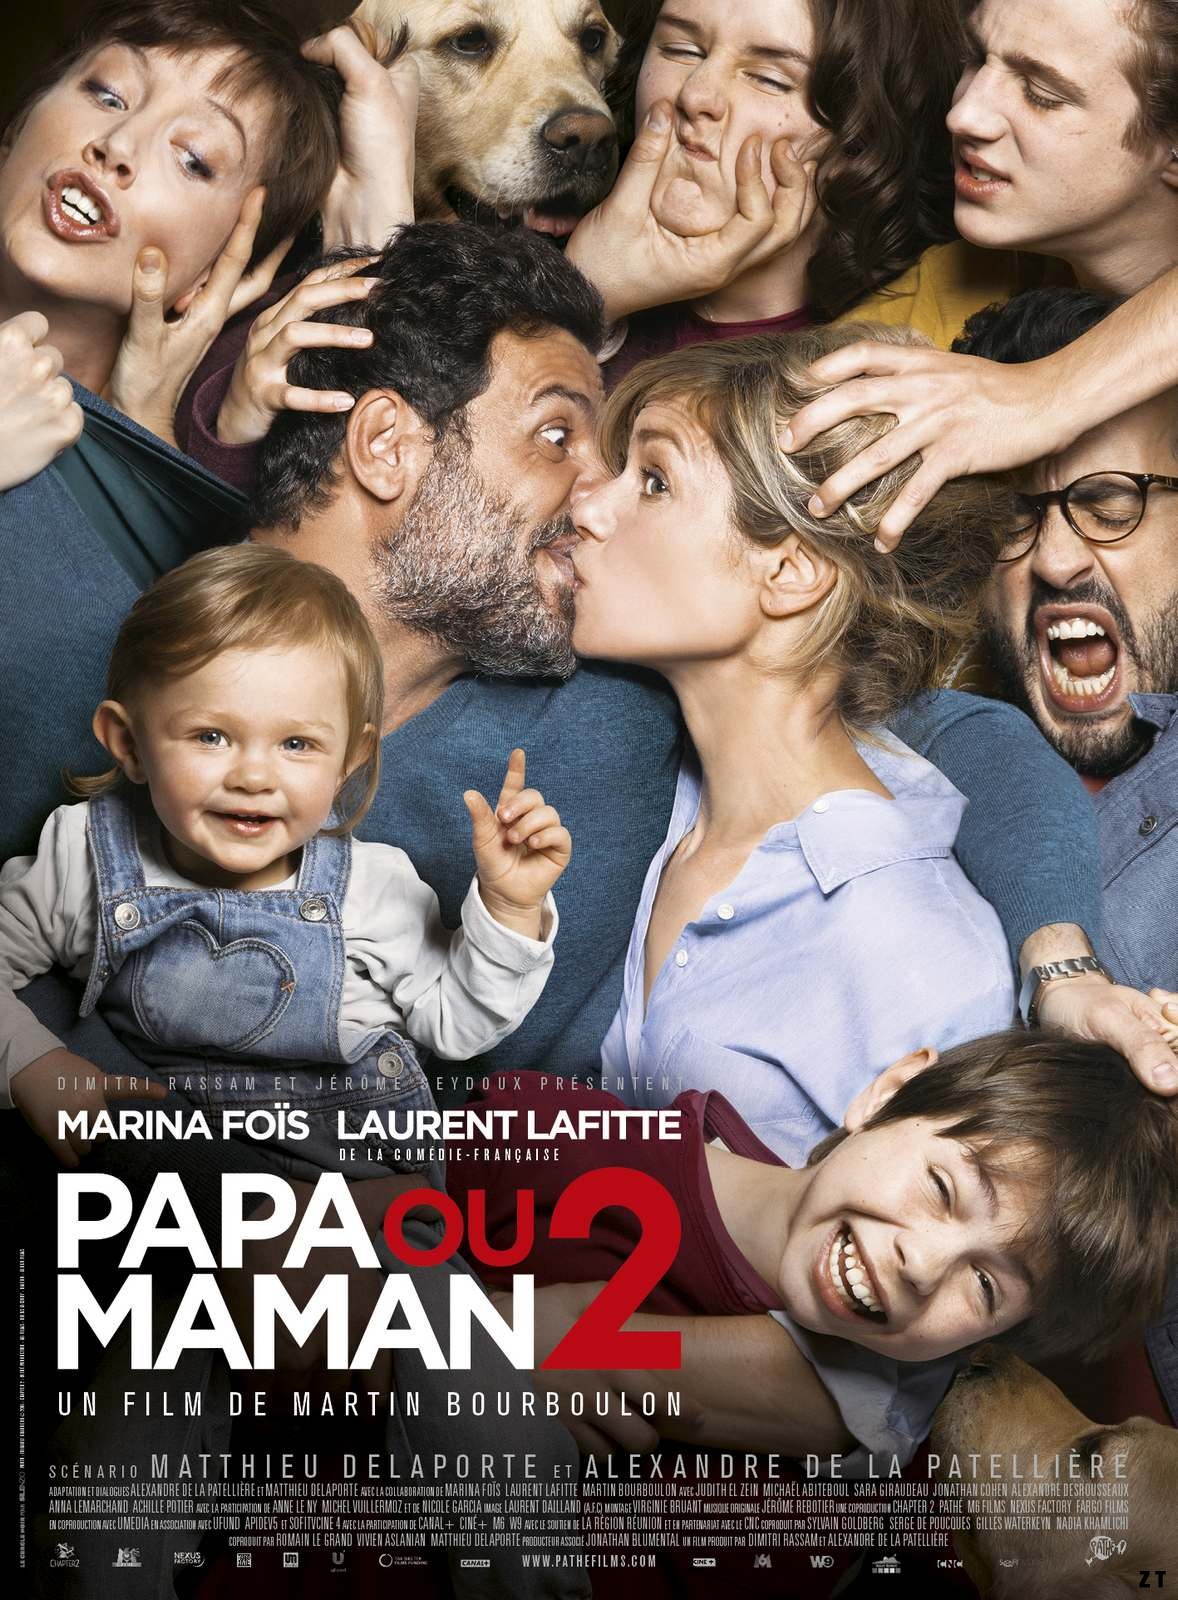 Papa ou maman 2 FRENCH DVDRIP 2016